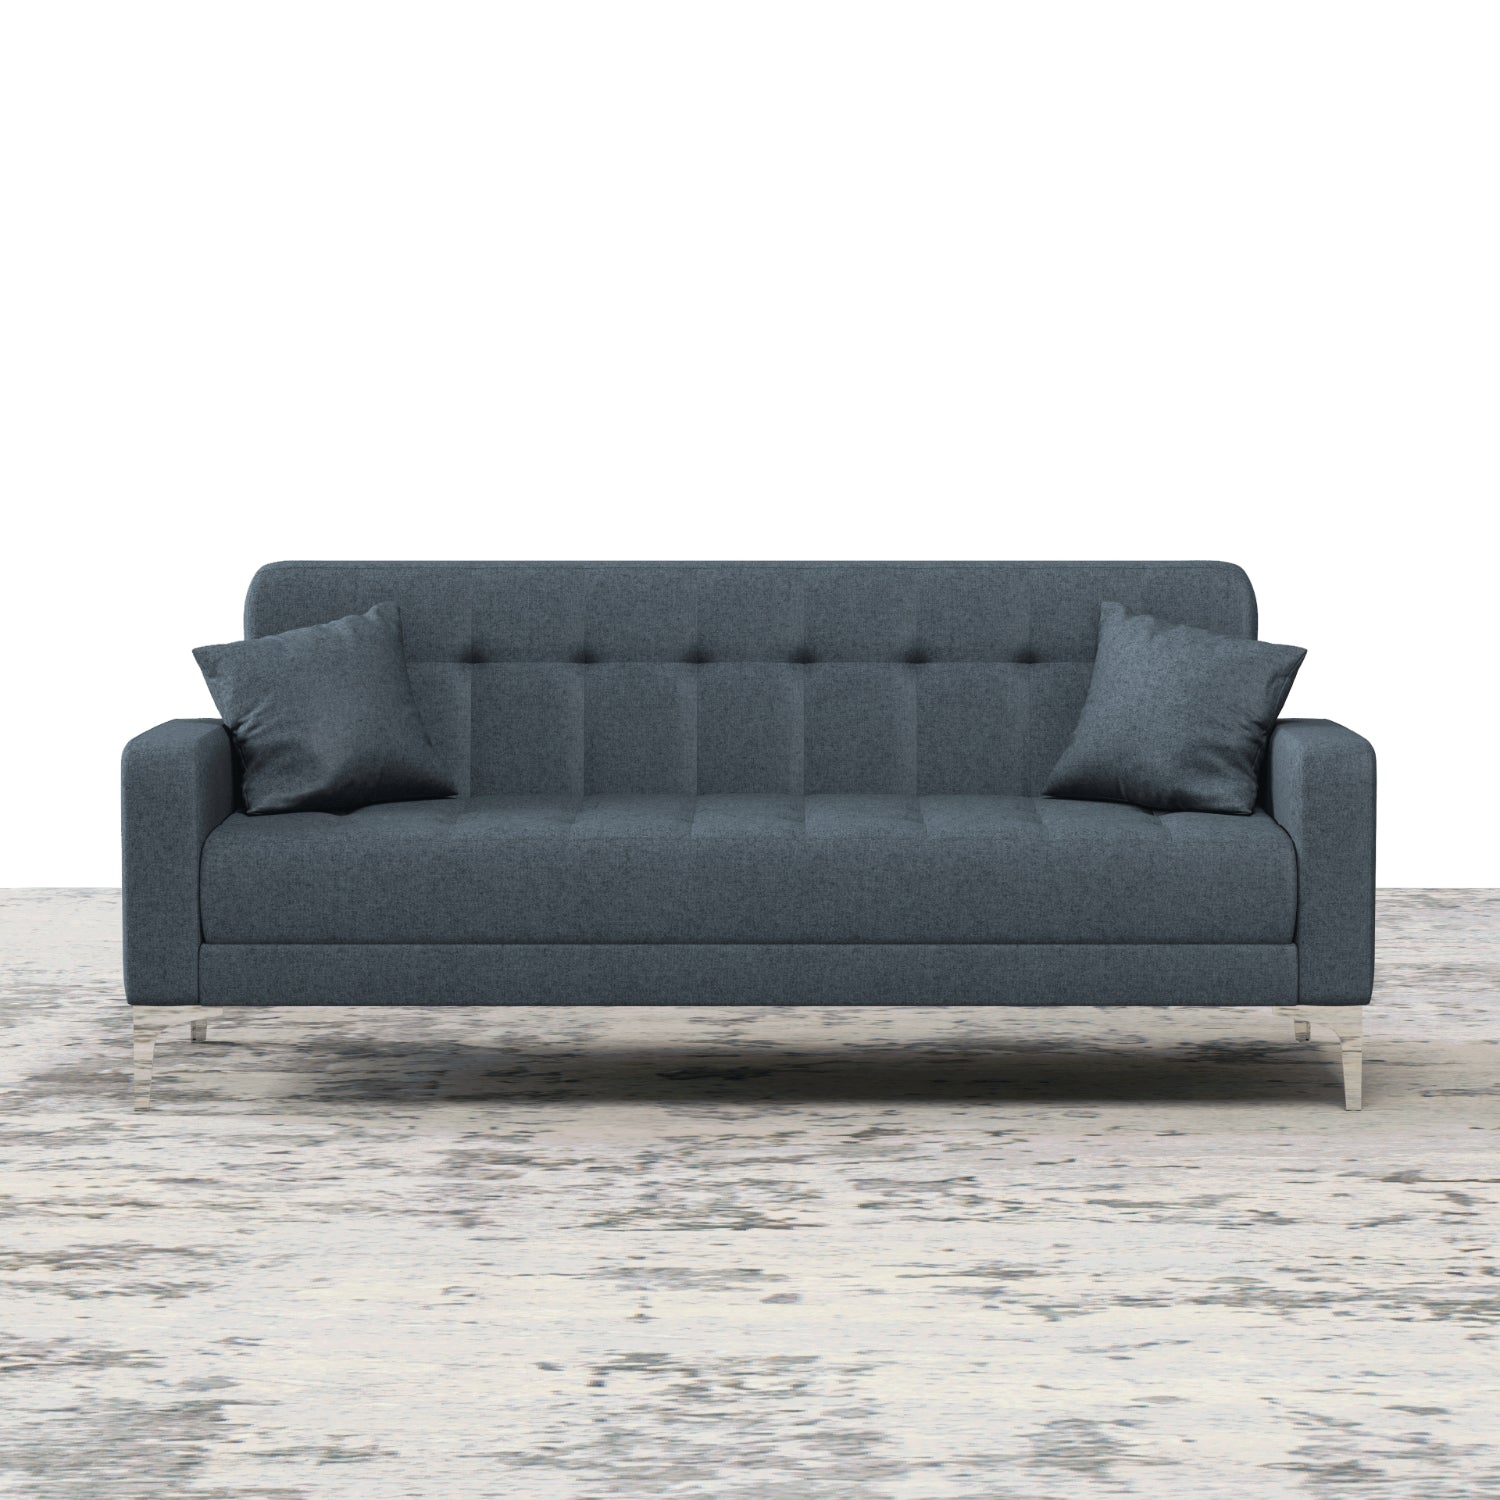 ViscoLogic Bella Forward Fashion Mid-Century Tufted Style Fabric Upholstered Modern Living Room Sofa